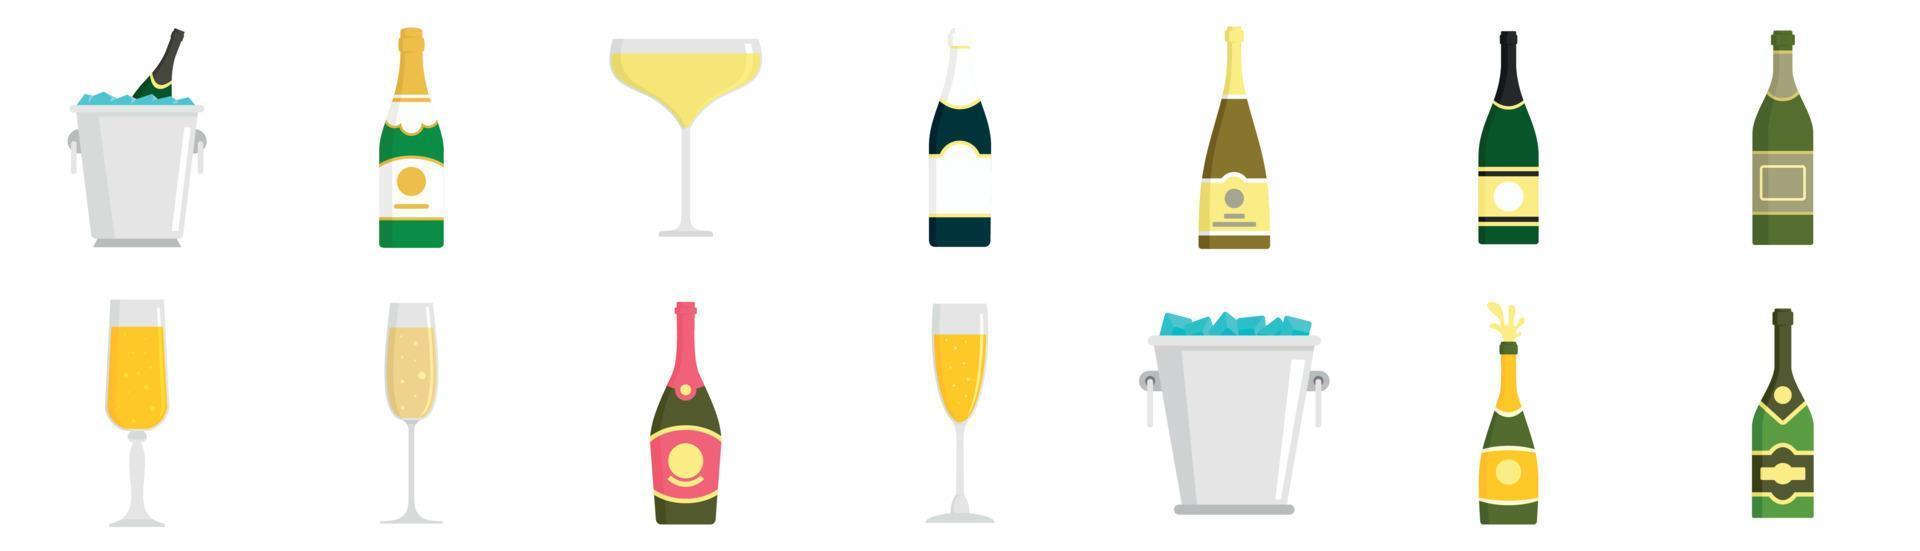 champagne pictogrammenset, vlakke stijl vector